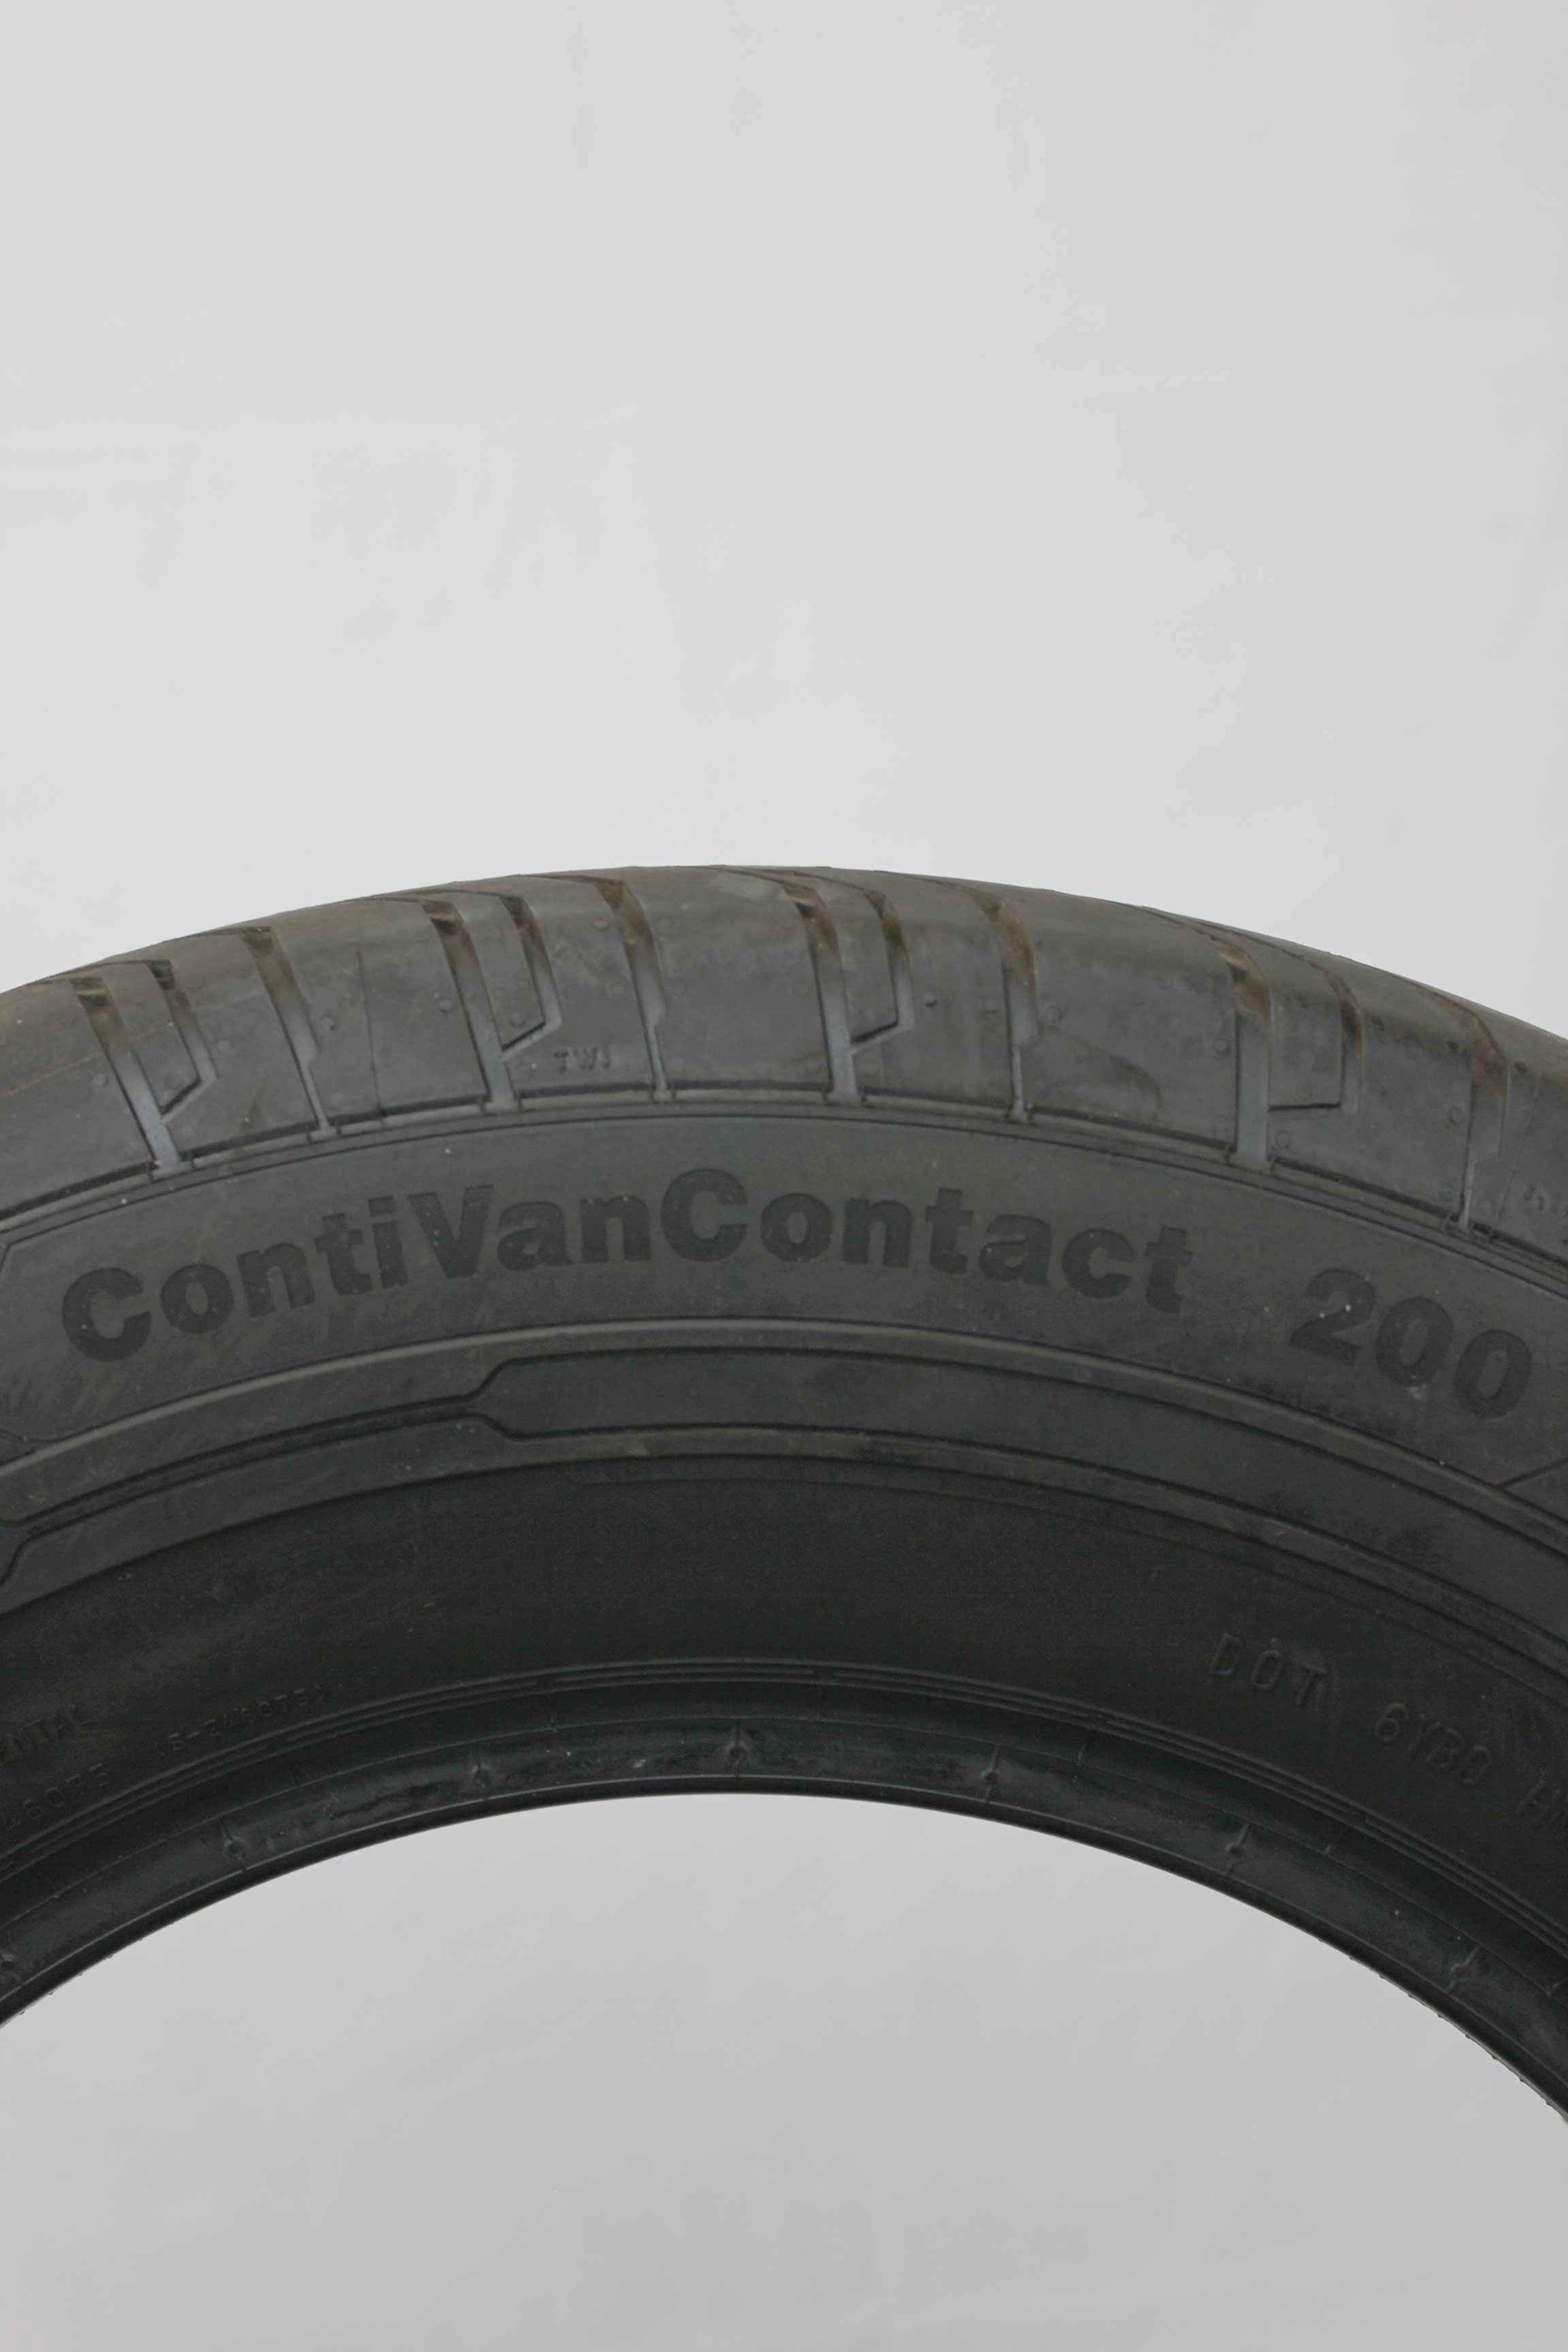 Sommerreifen-Continental-ContiVanContact200-235-65-R16C-115-113R-2_(19)